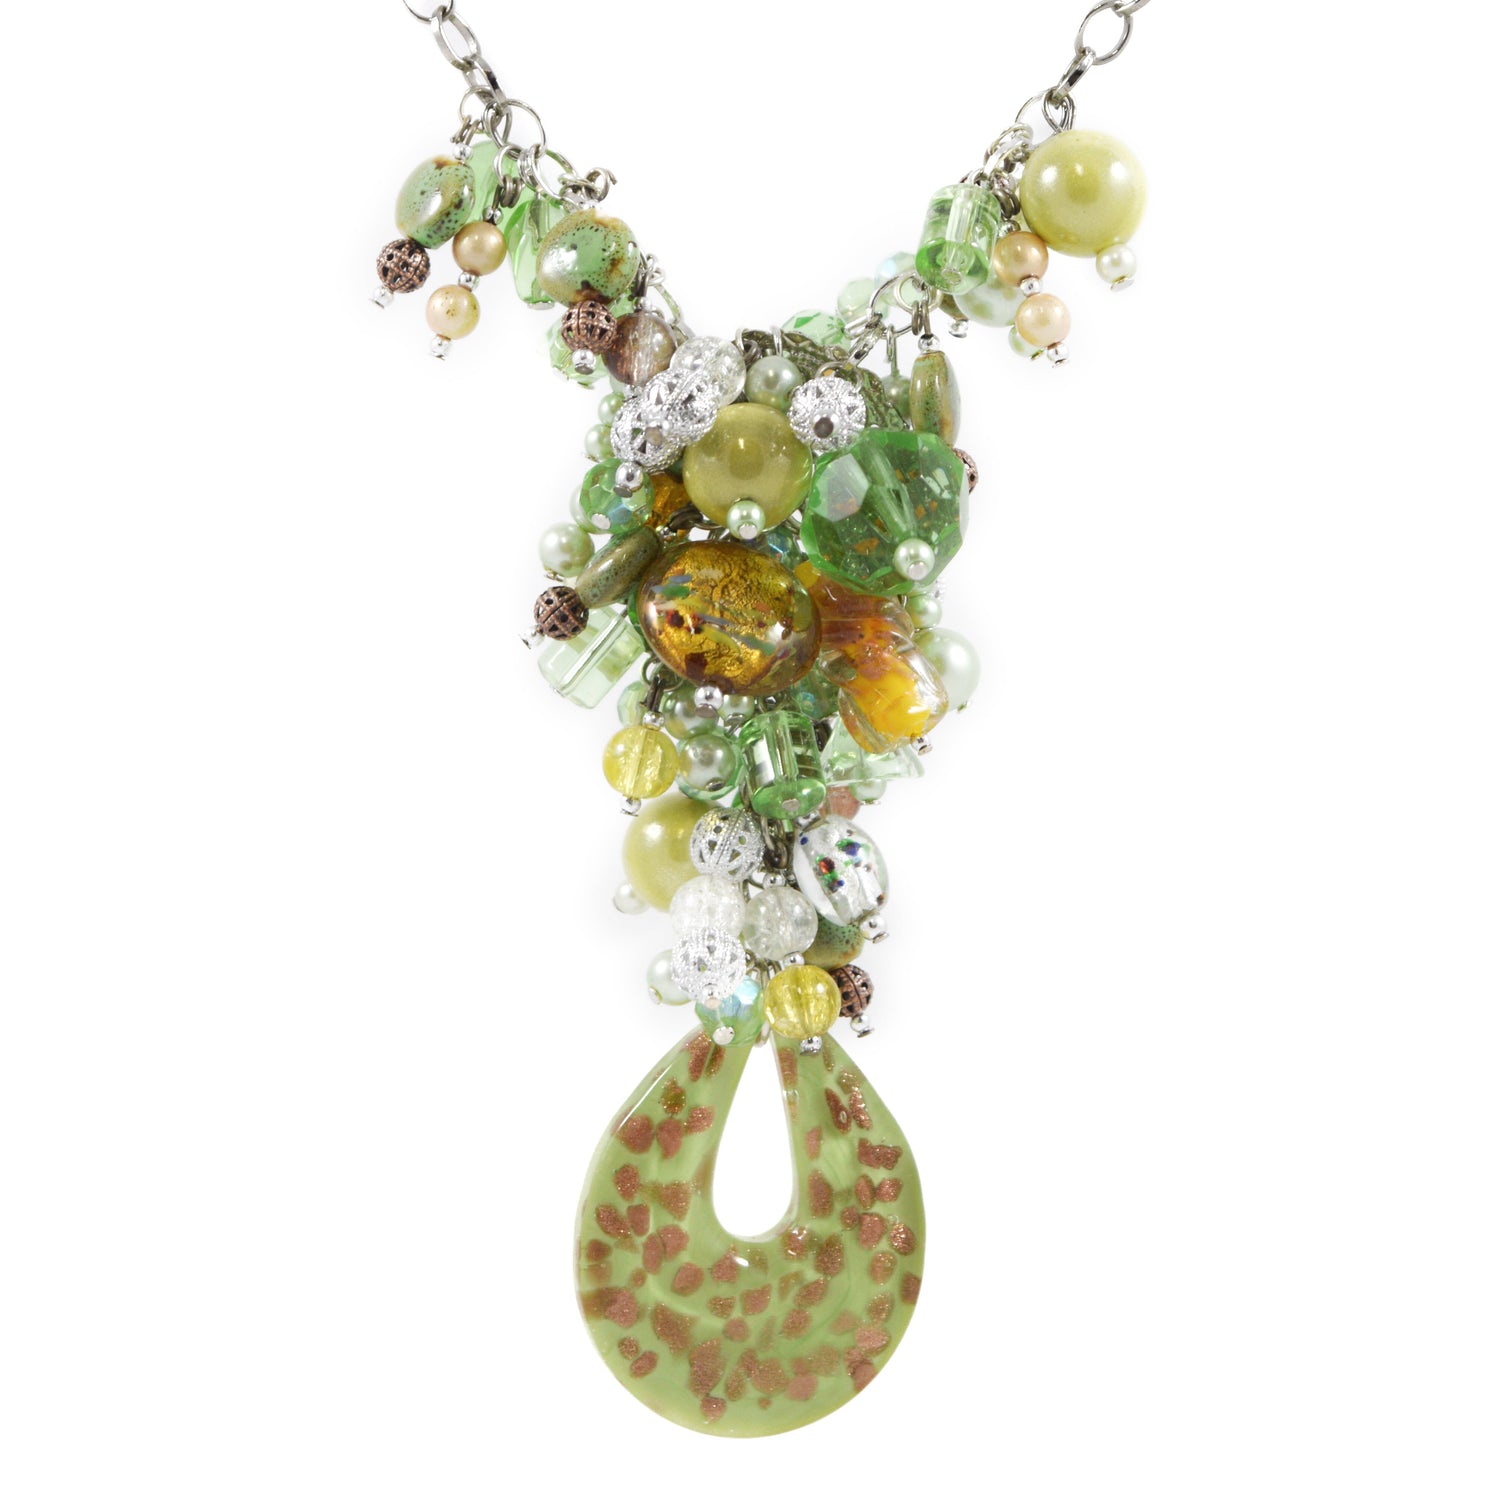 Anthologie handmade beaded fine jewelry necklaces